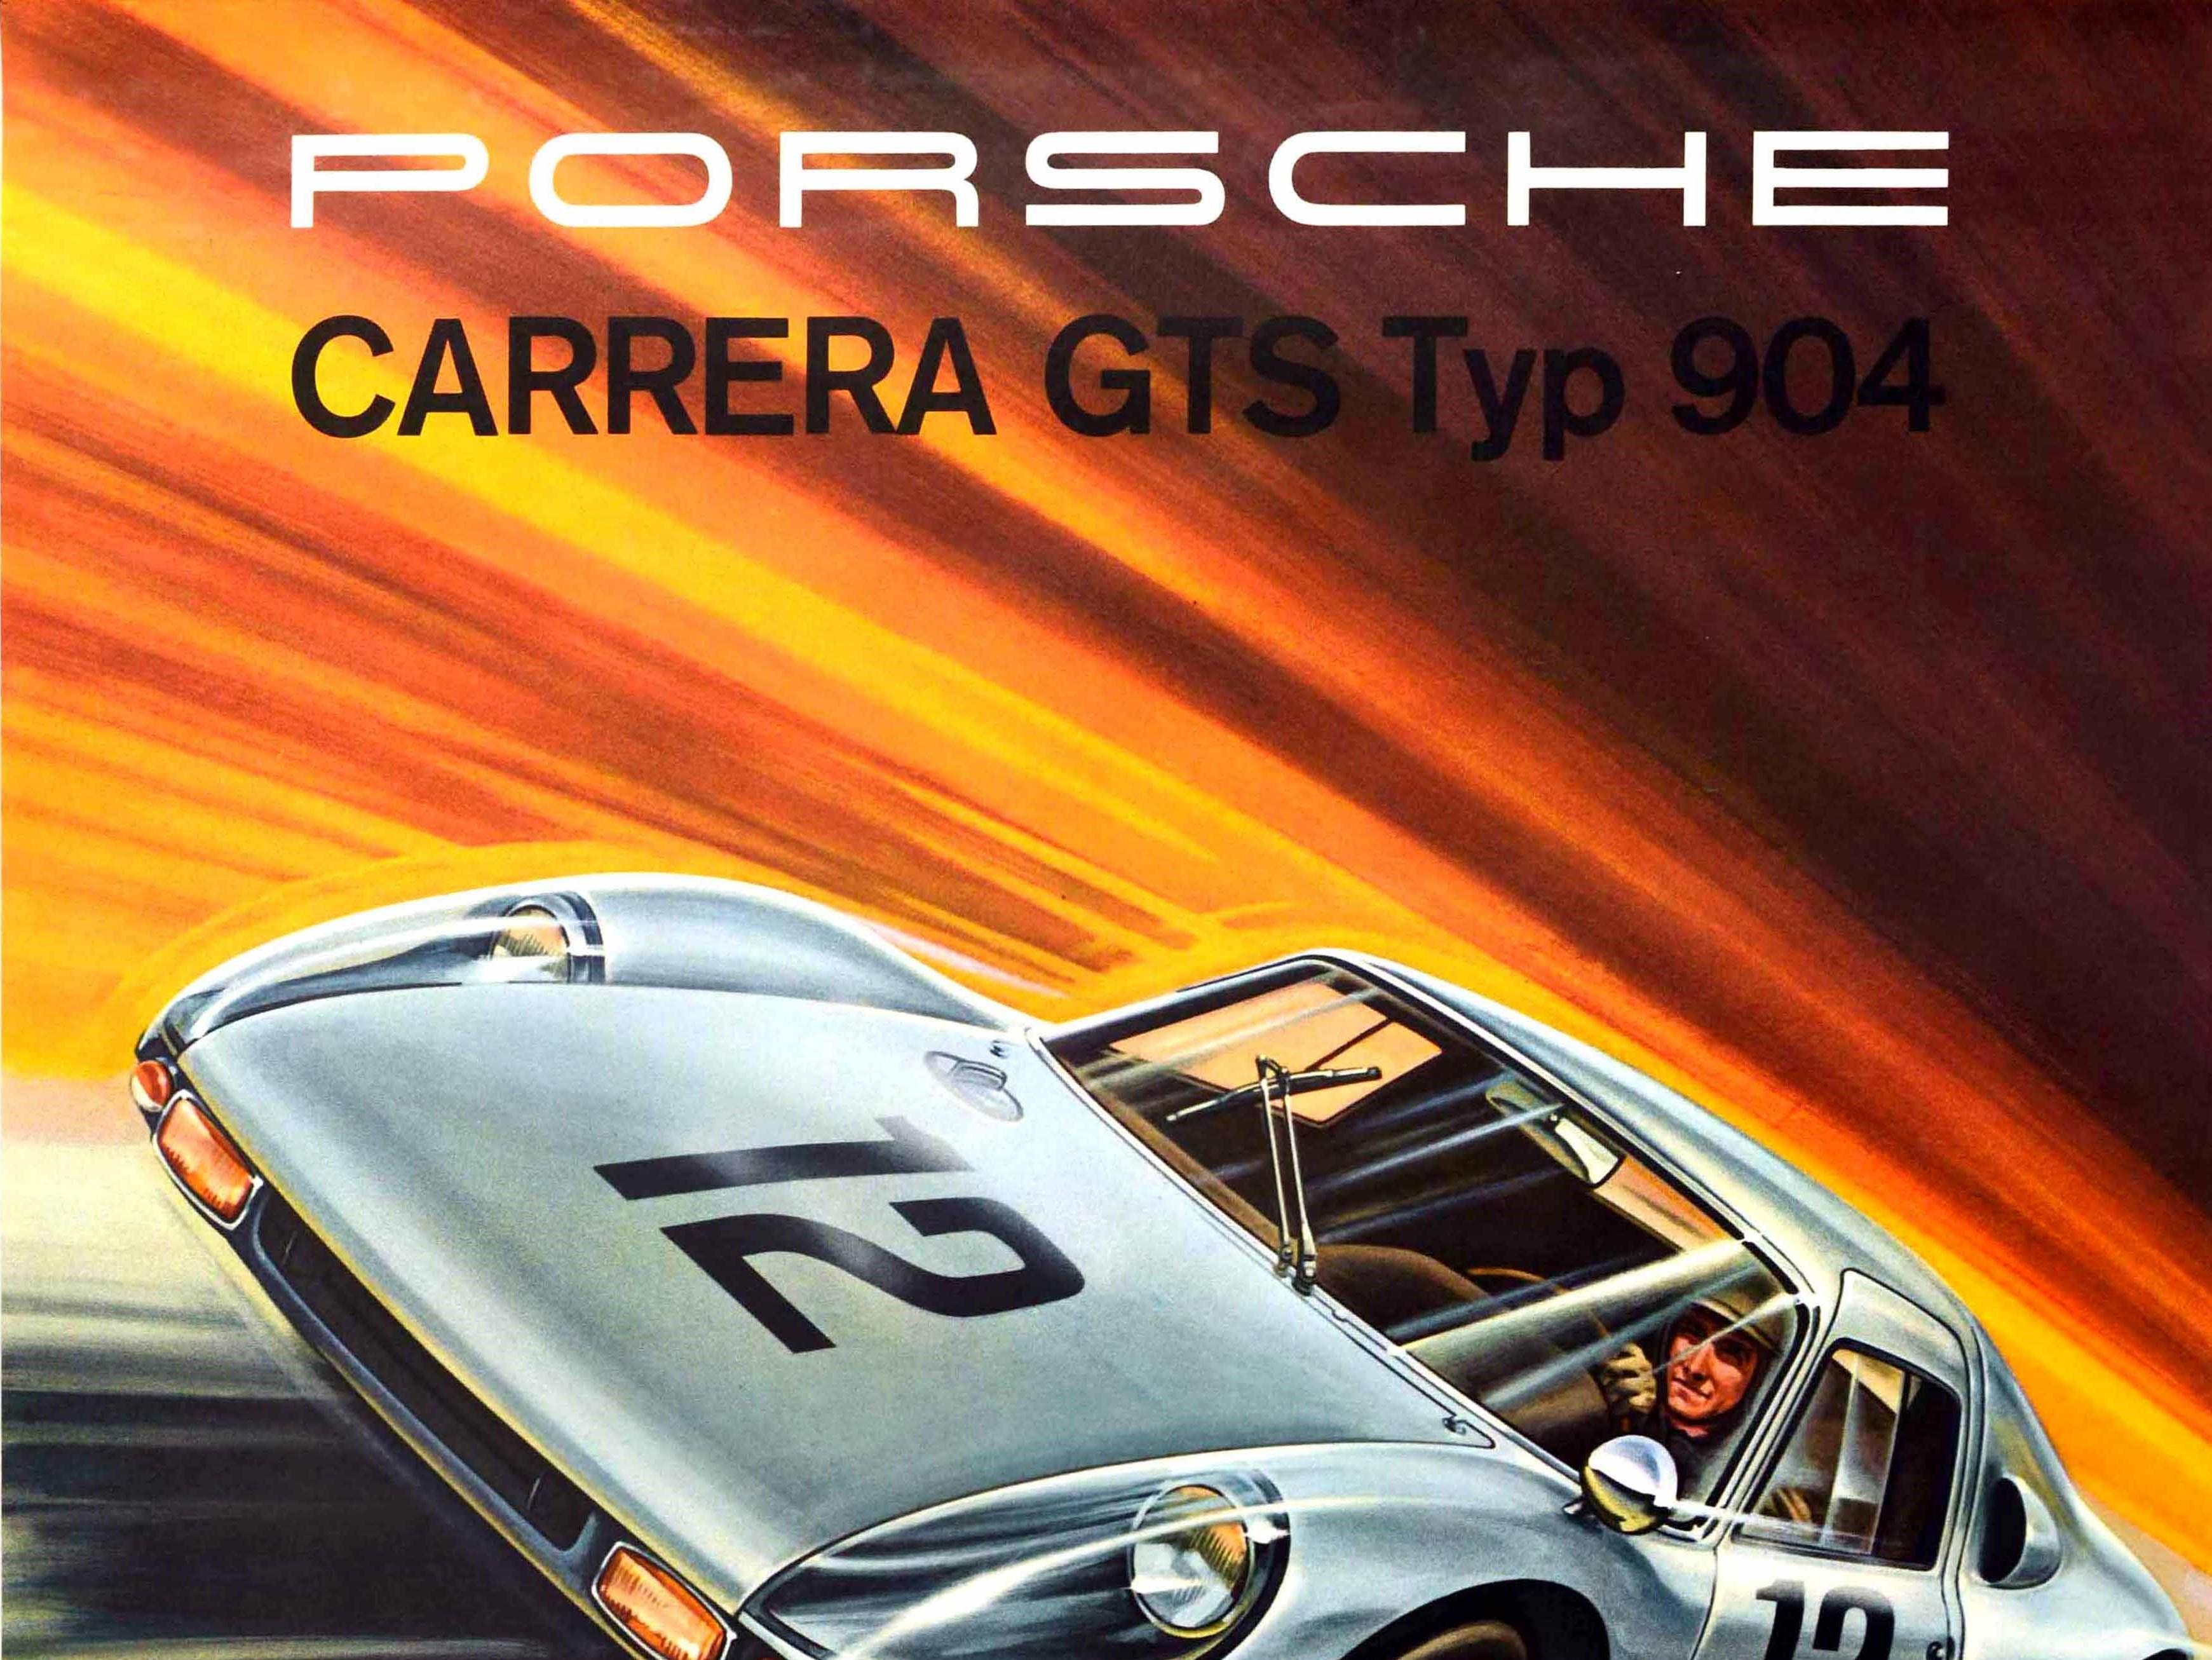 Original Vintage Car Poster Porsche Carrera GTS Typ 904 Auto Racing Motor Sport - Print by Erich Strenger